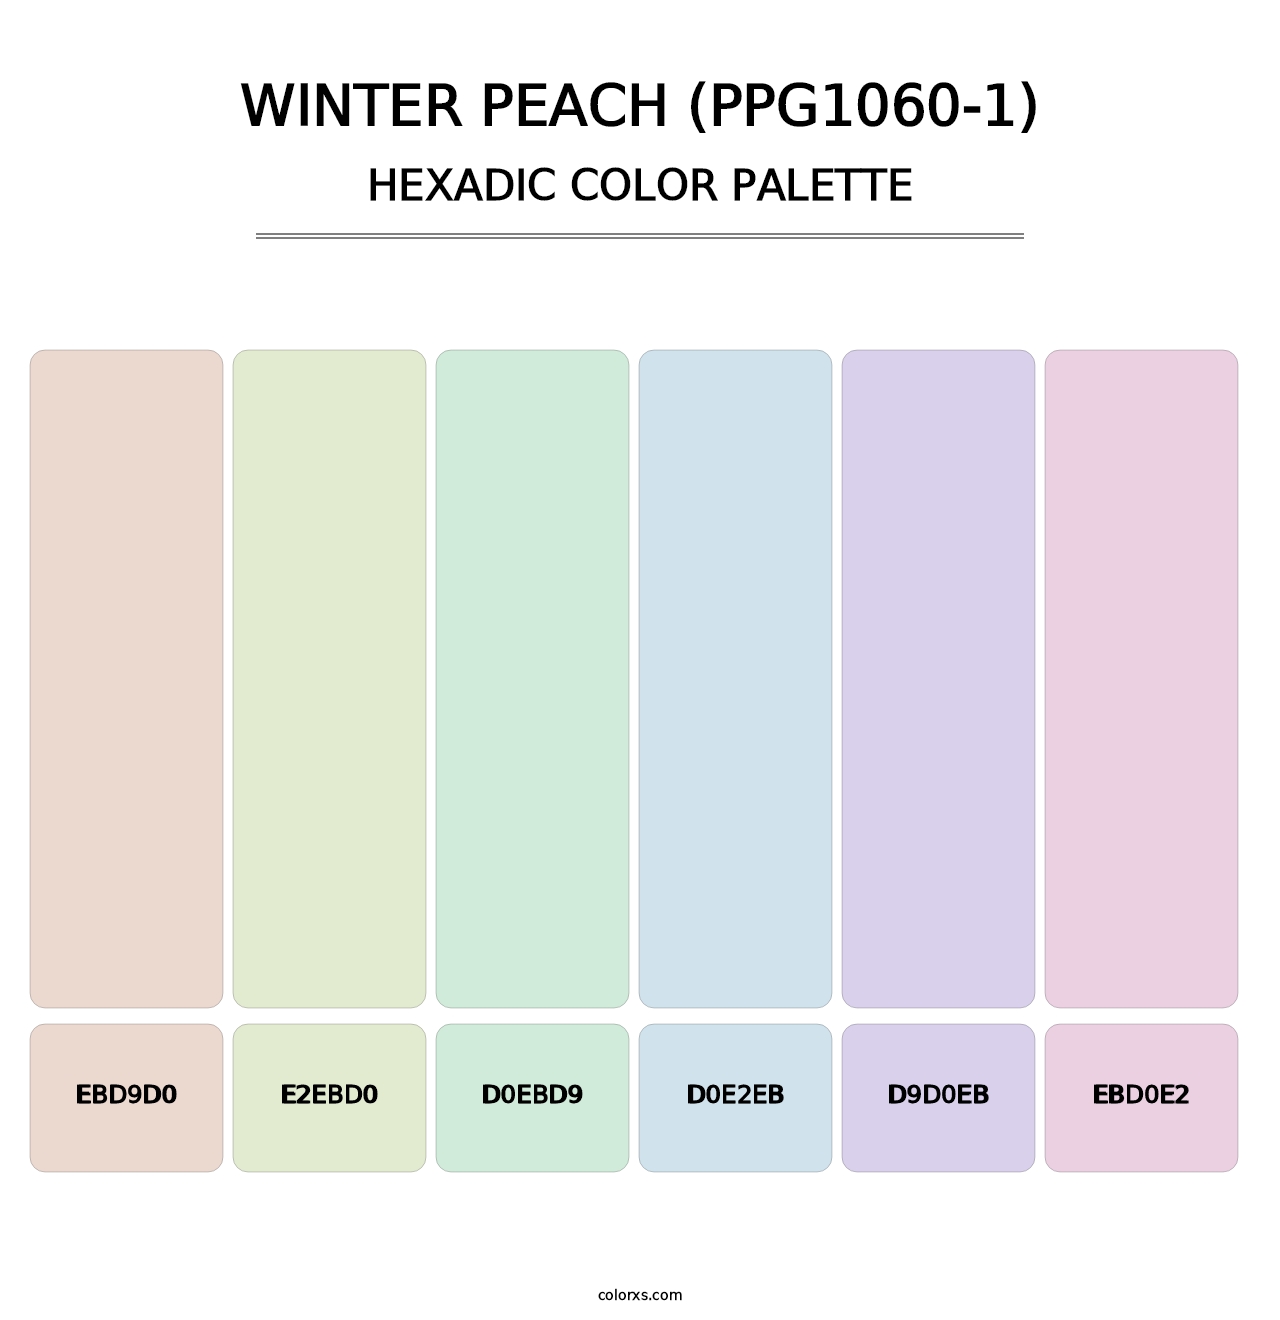 Winter Peach (PPG1060-1) - Hexadic Color Palette